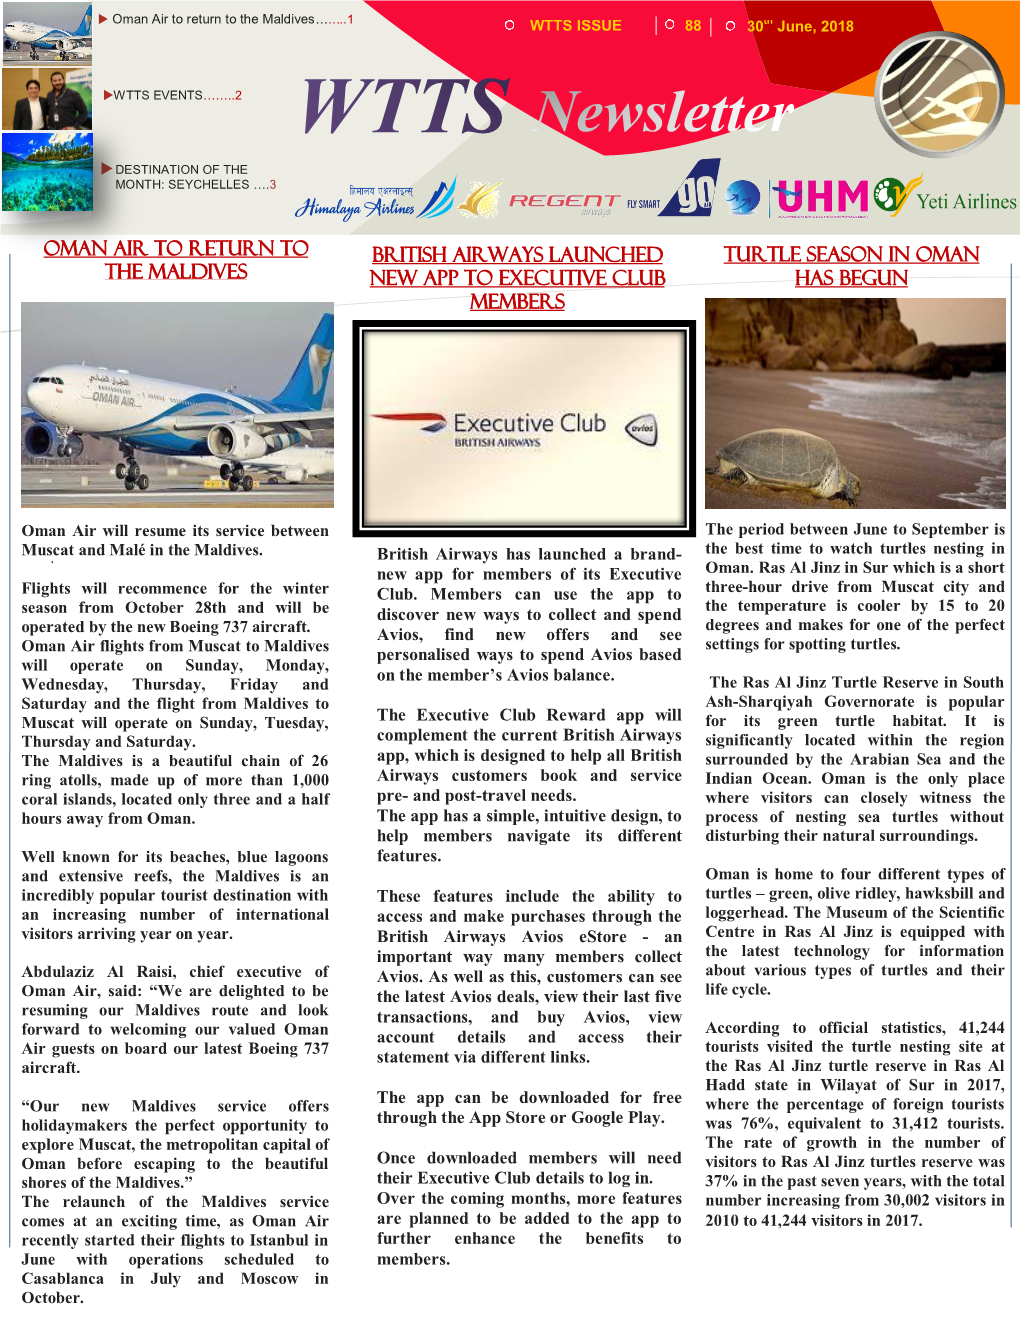 OMAN AIR to RETURN to the MALDIVES BRITISH Airways